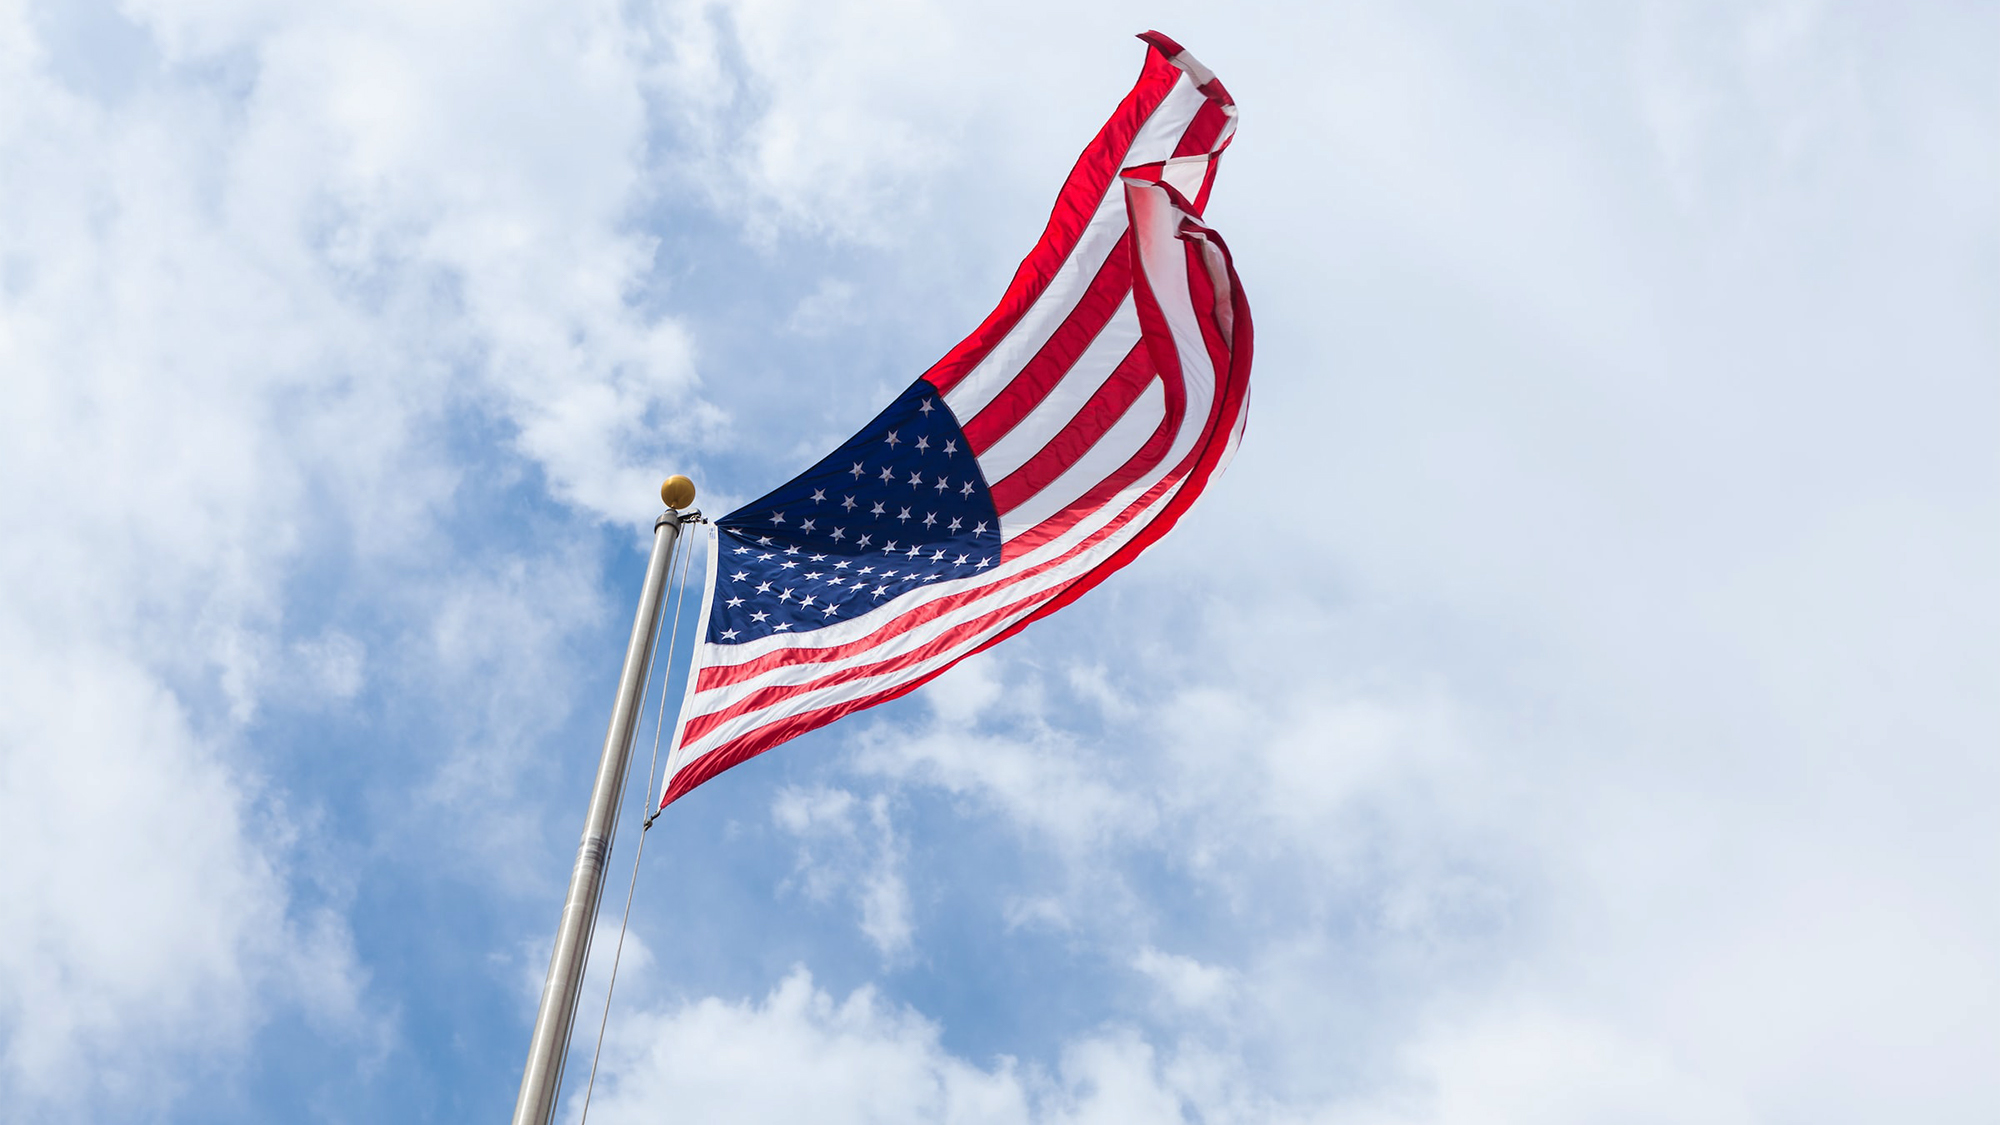 An American flag flies from a flagpole against a blue sky